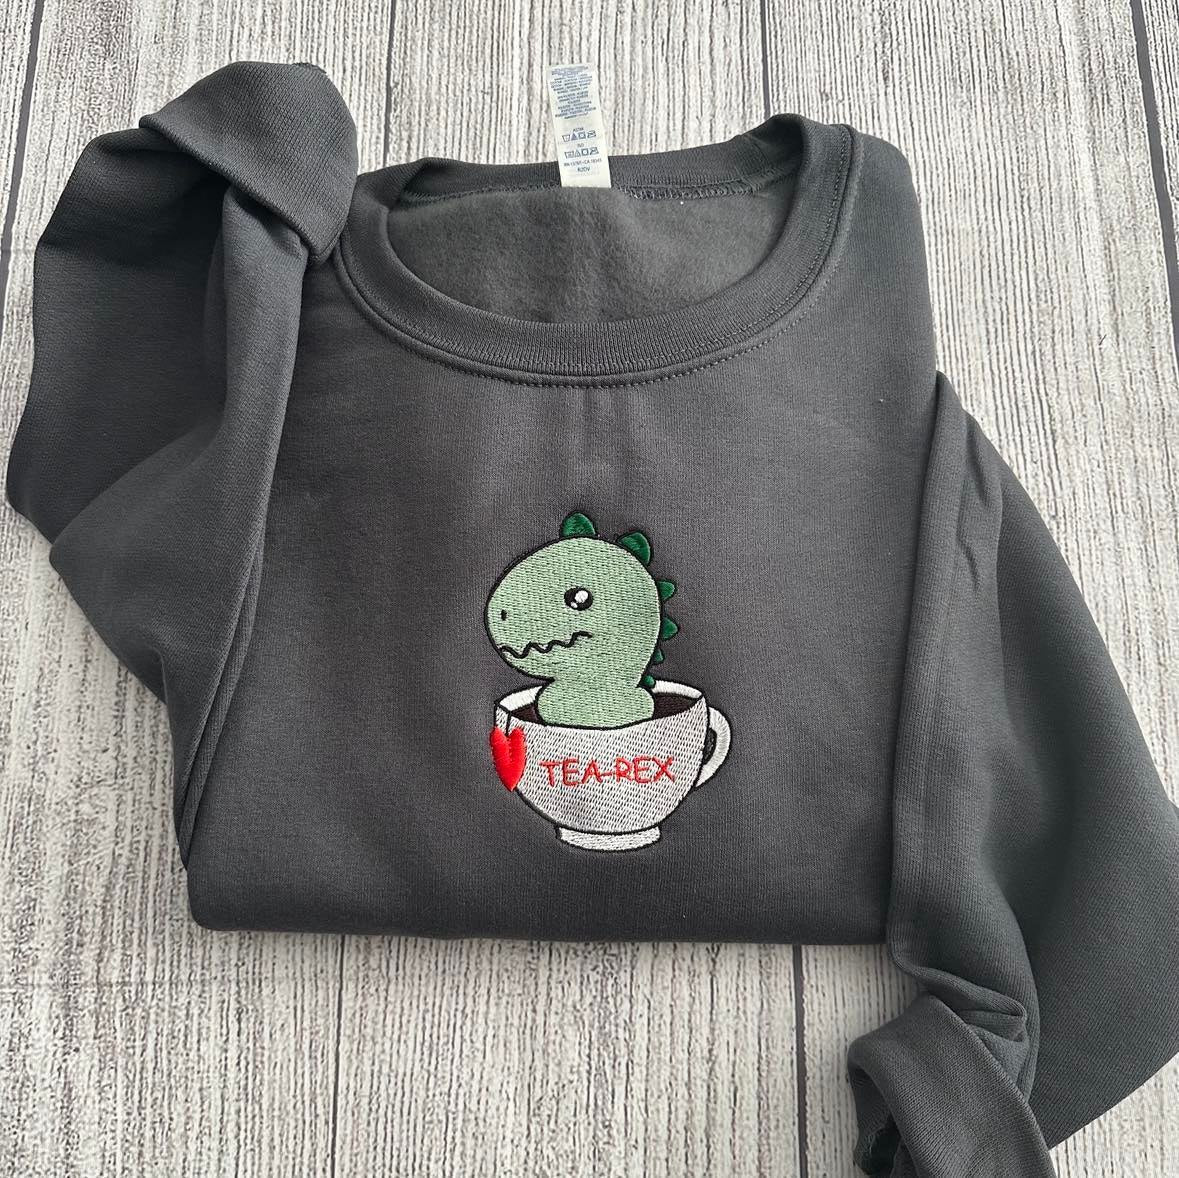 Tea Rex Embroidered sweatshirt; Dinosaurs sarcasm Embroidery crewneck